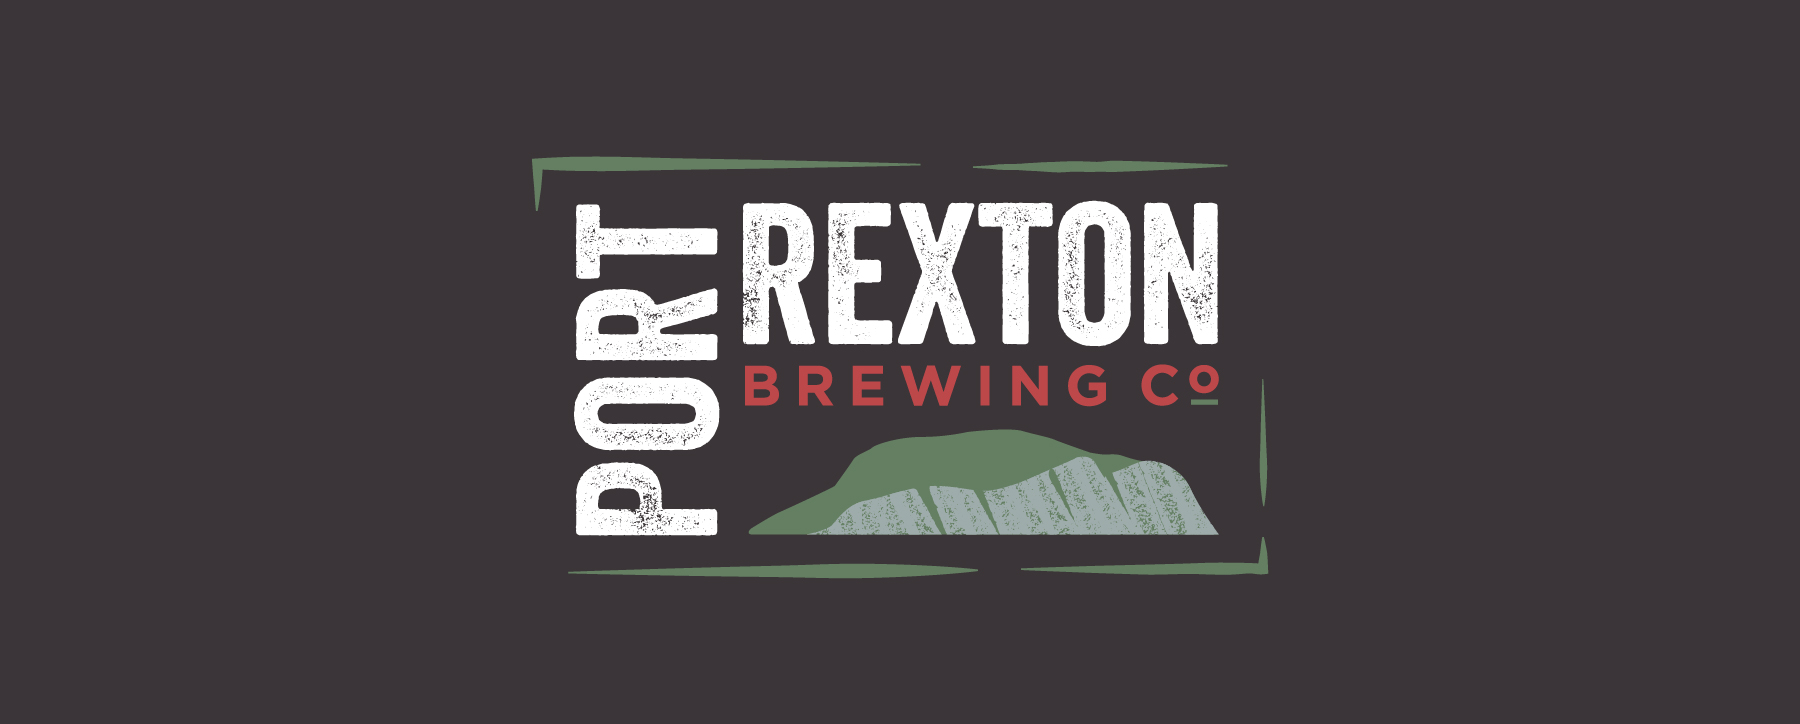 Port Rexton Brewing Co - Branding